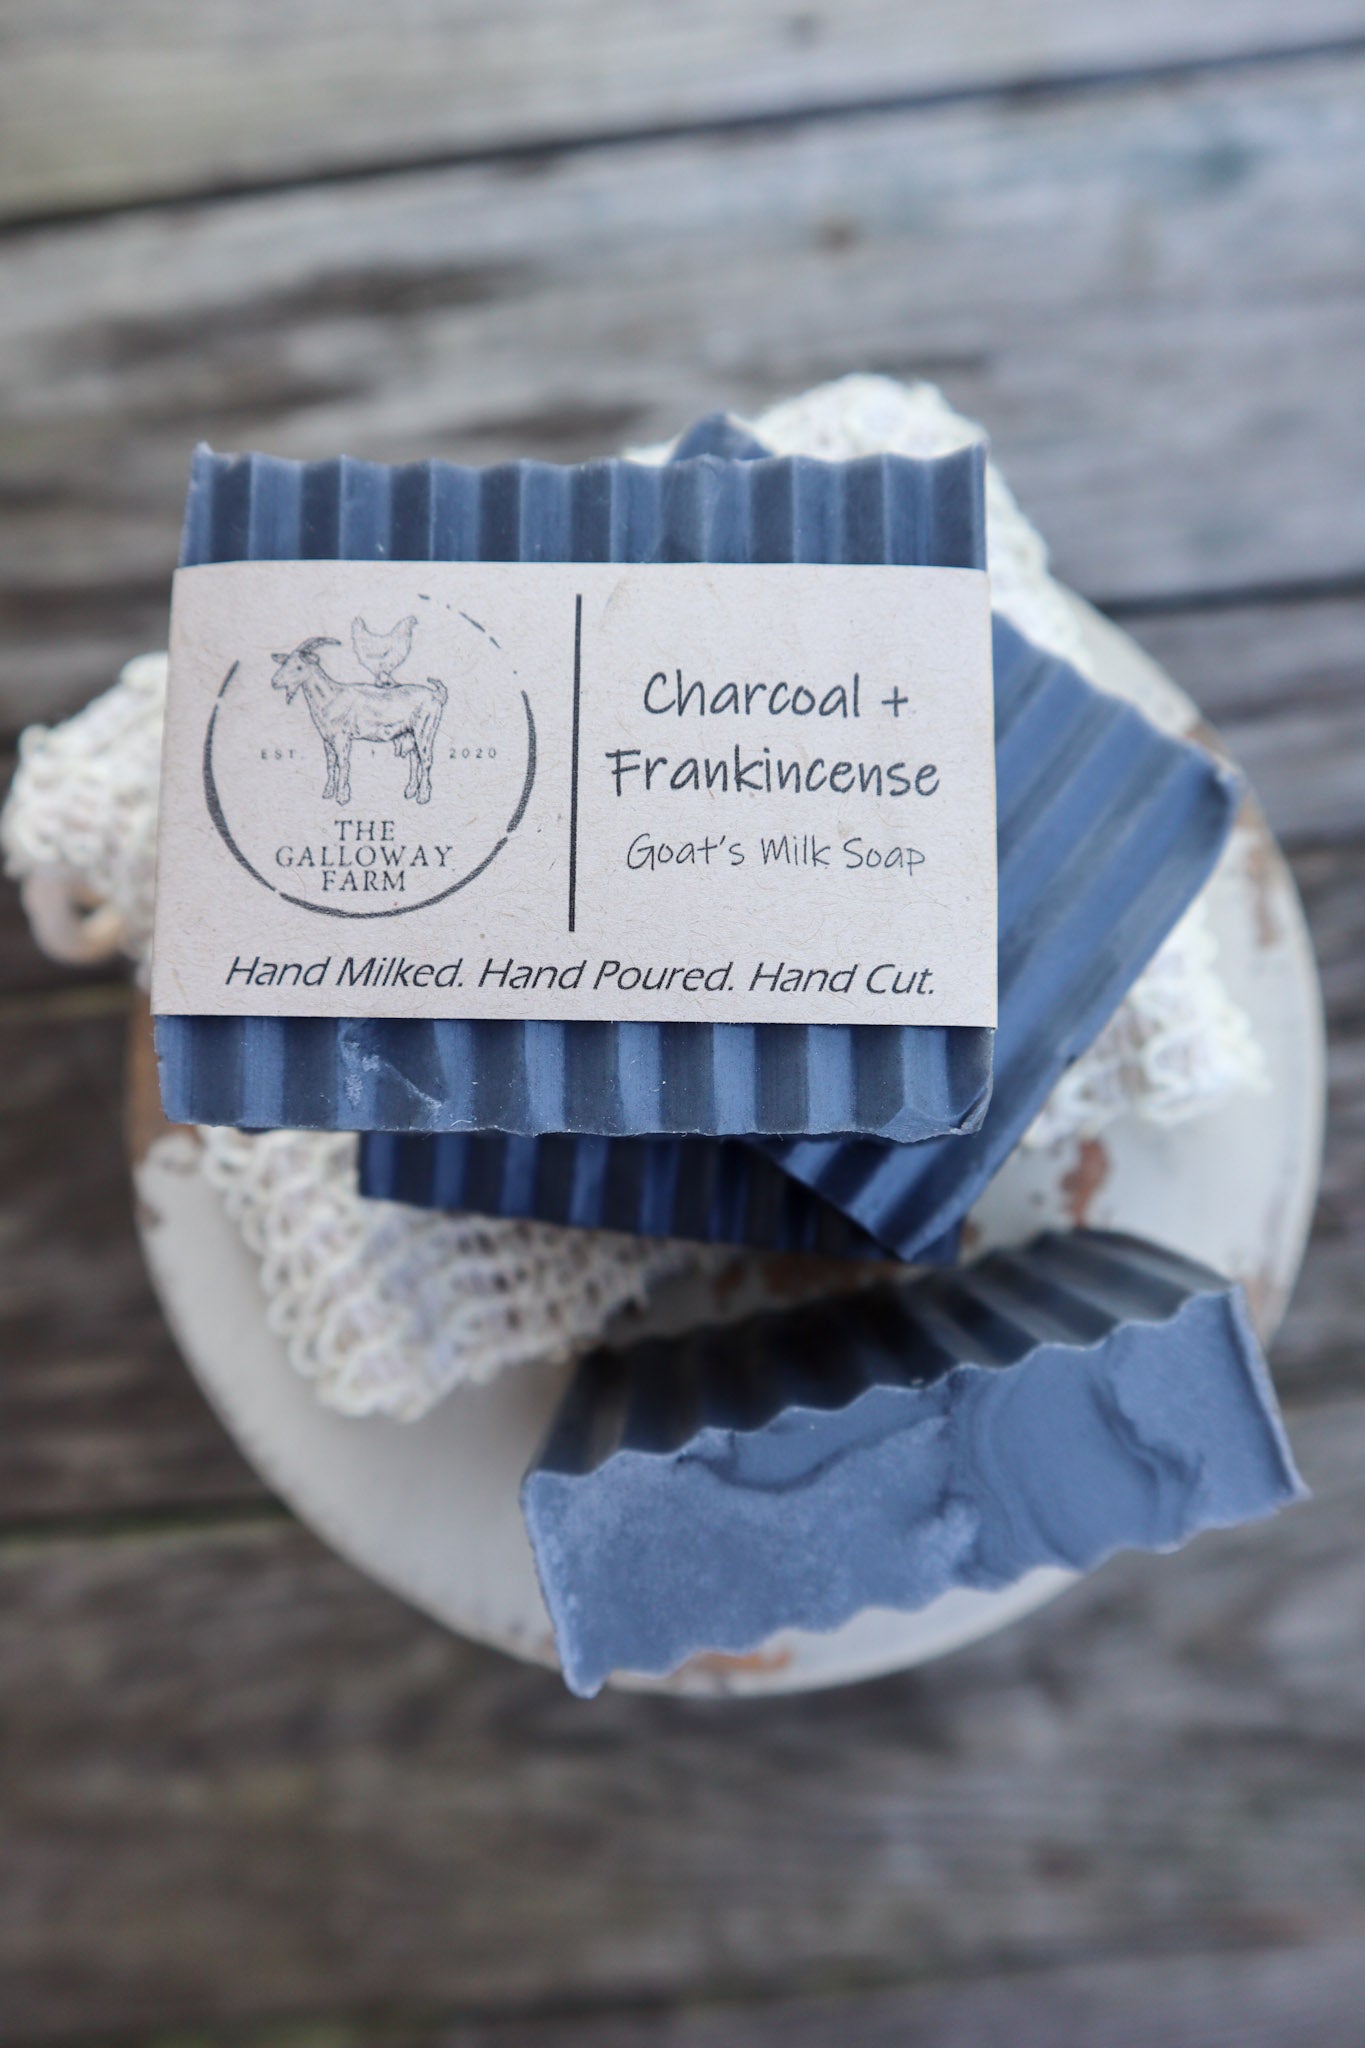 Charcoal + Frankincense Goat's Milk Soap